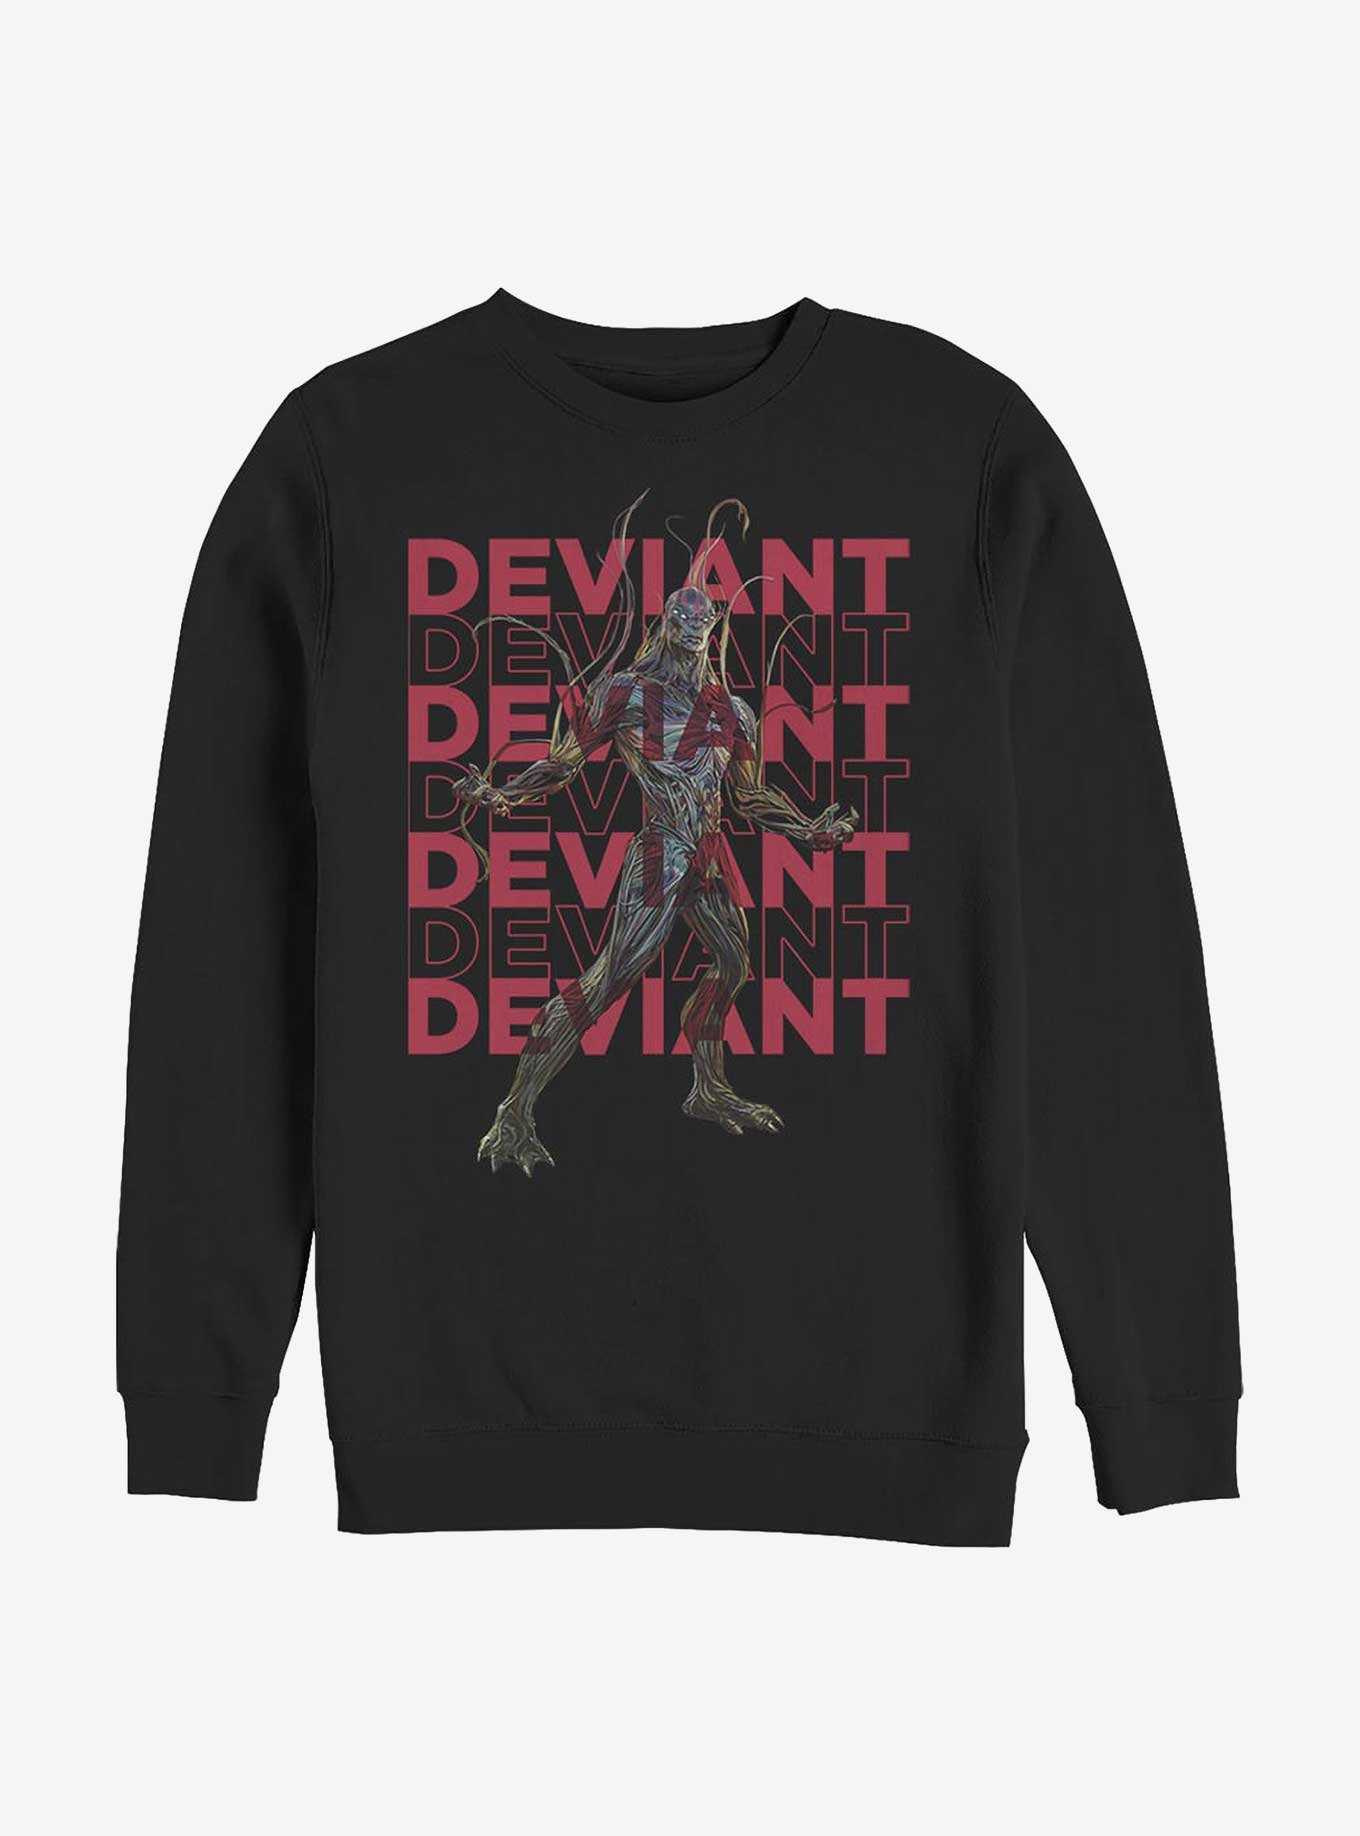 Marvel Eternals Kro Deviant Repeating Sweatshirt, , hi-res